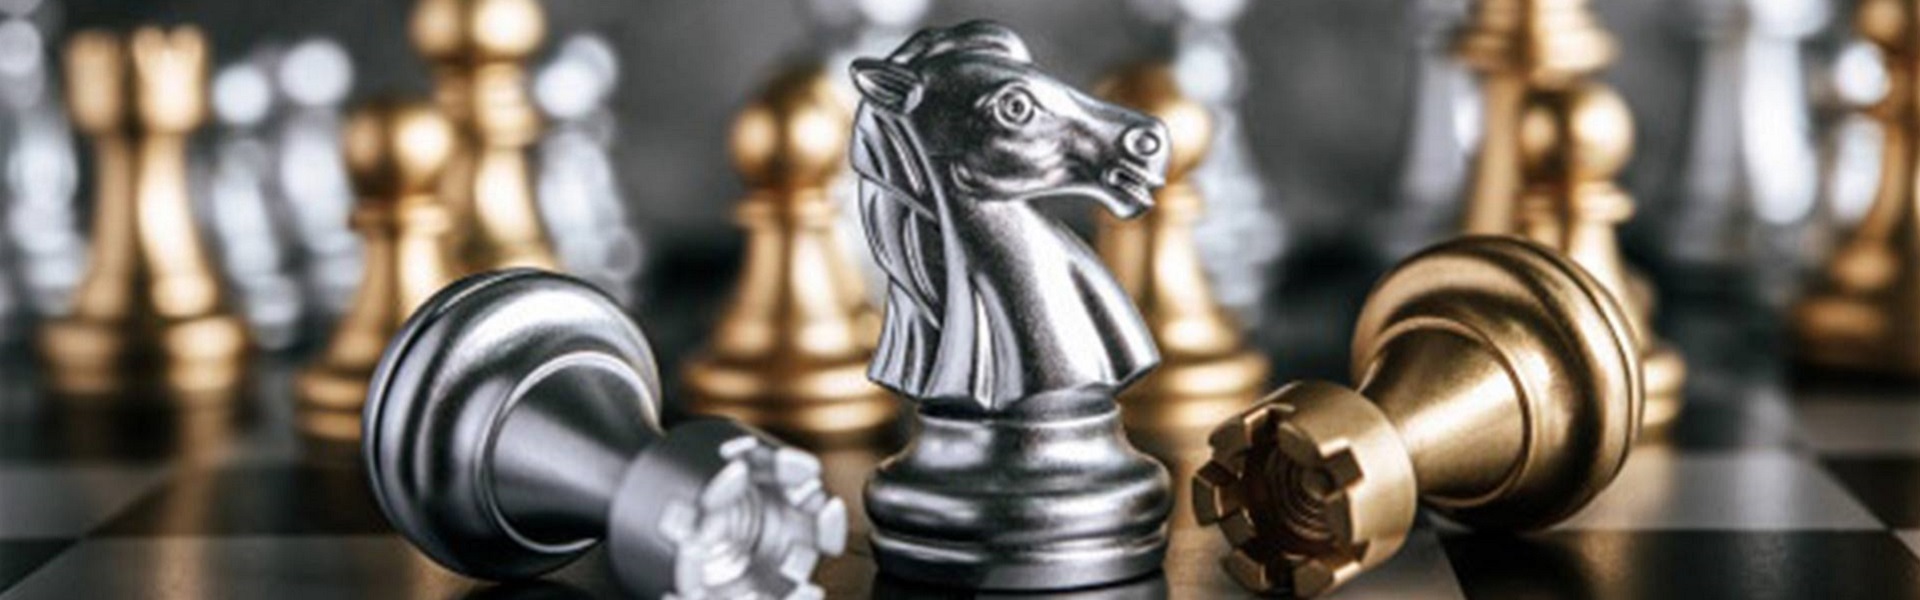 Rent a car Kraljevo |  Chess lessons Dubai & New York